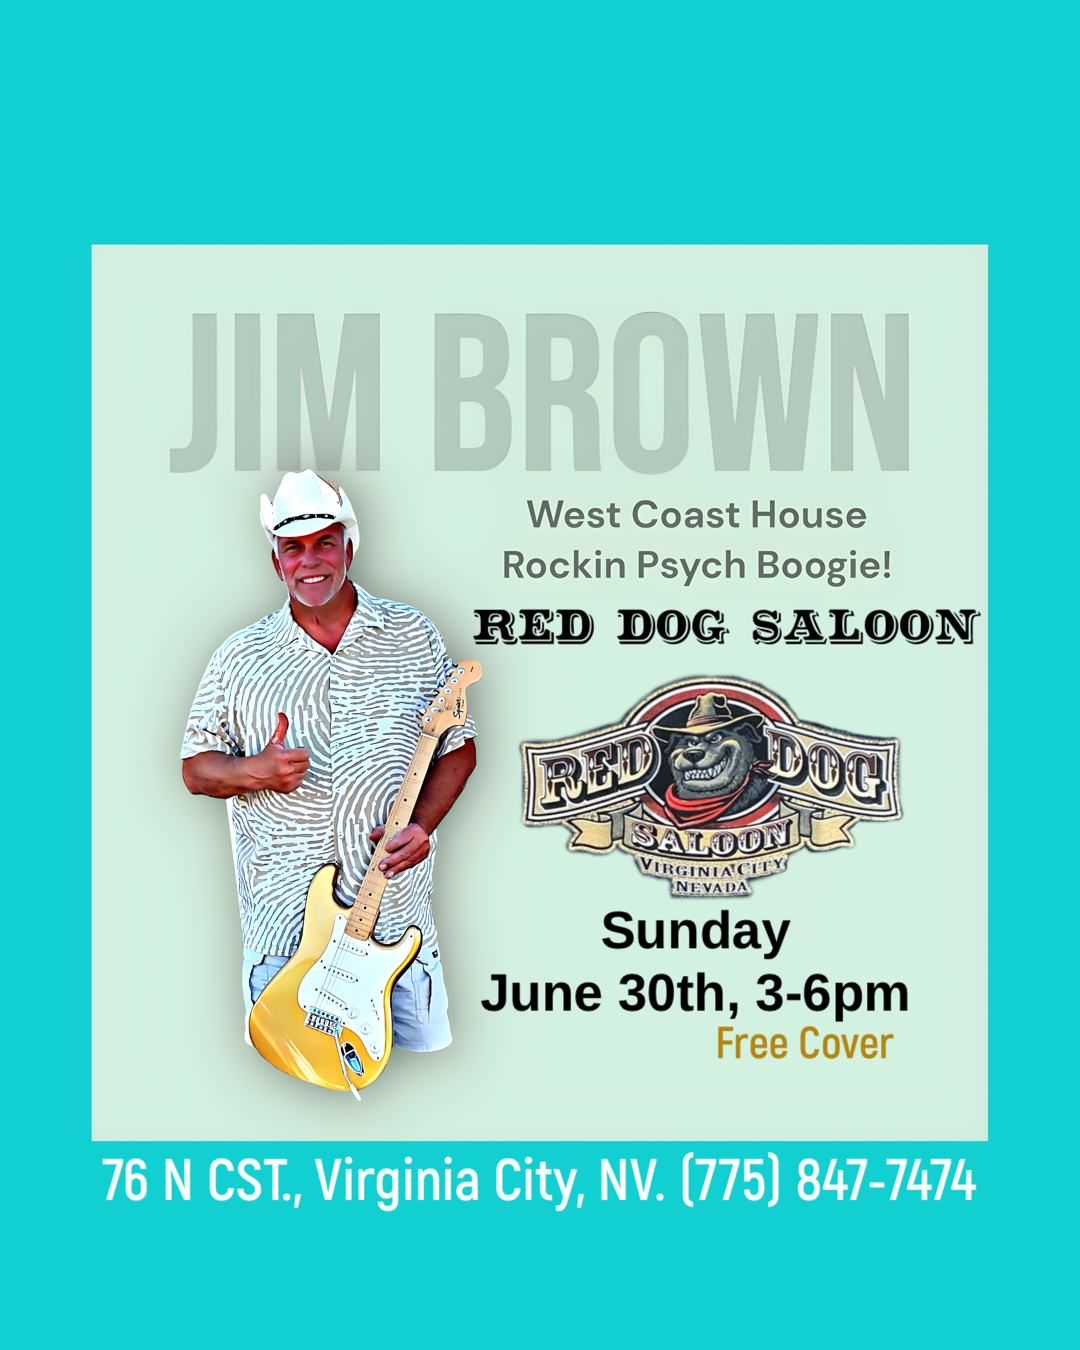 Jim Brown West Coast House Rockin Psych Boogie!